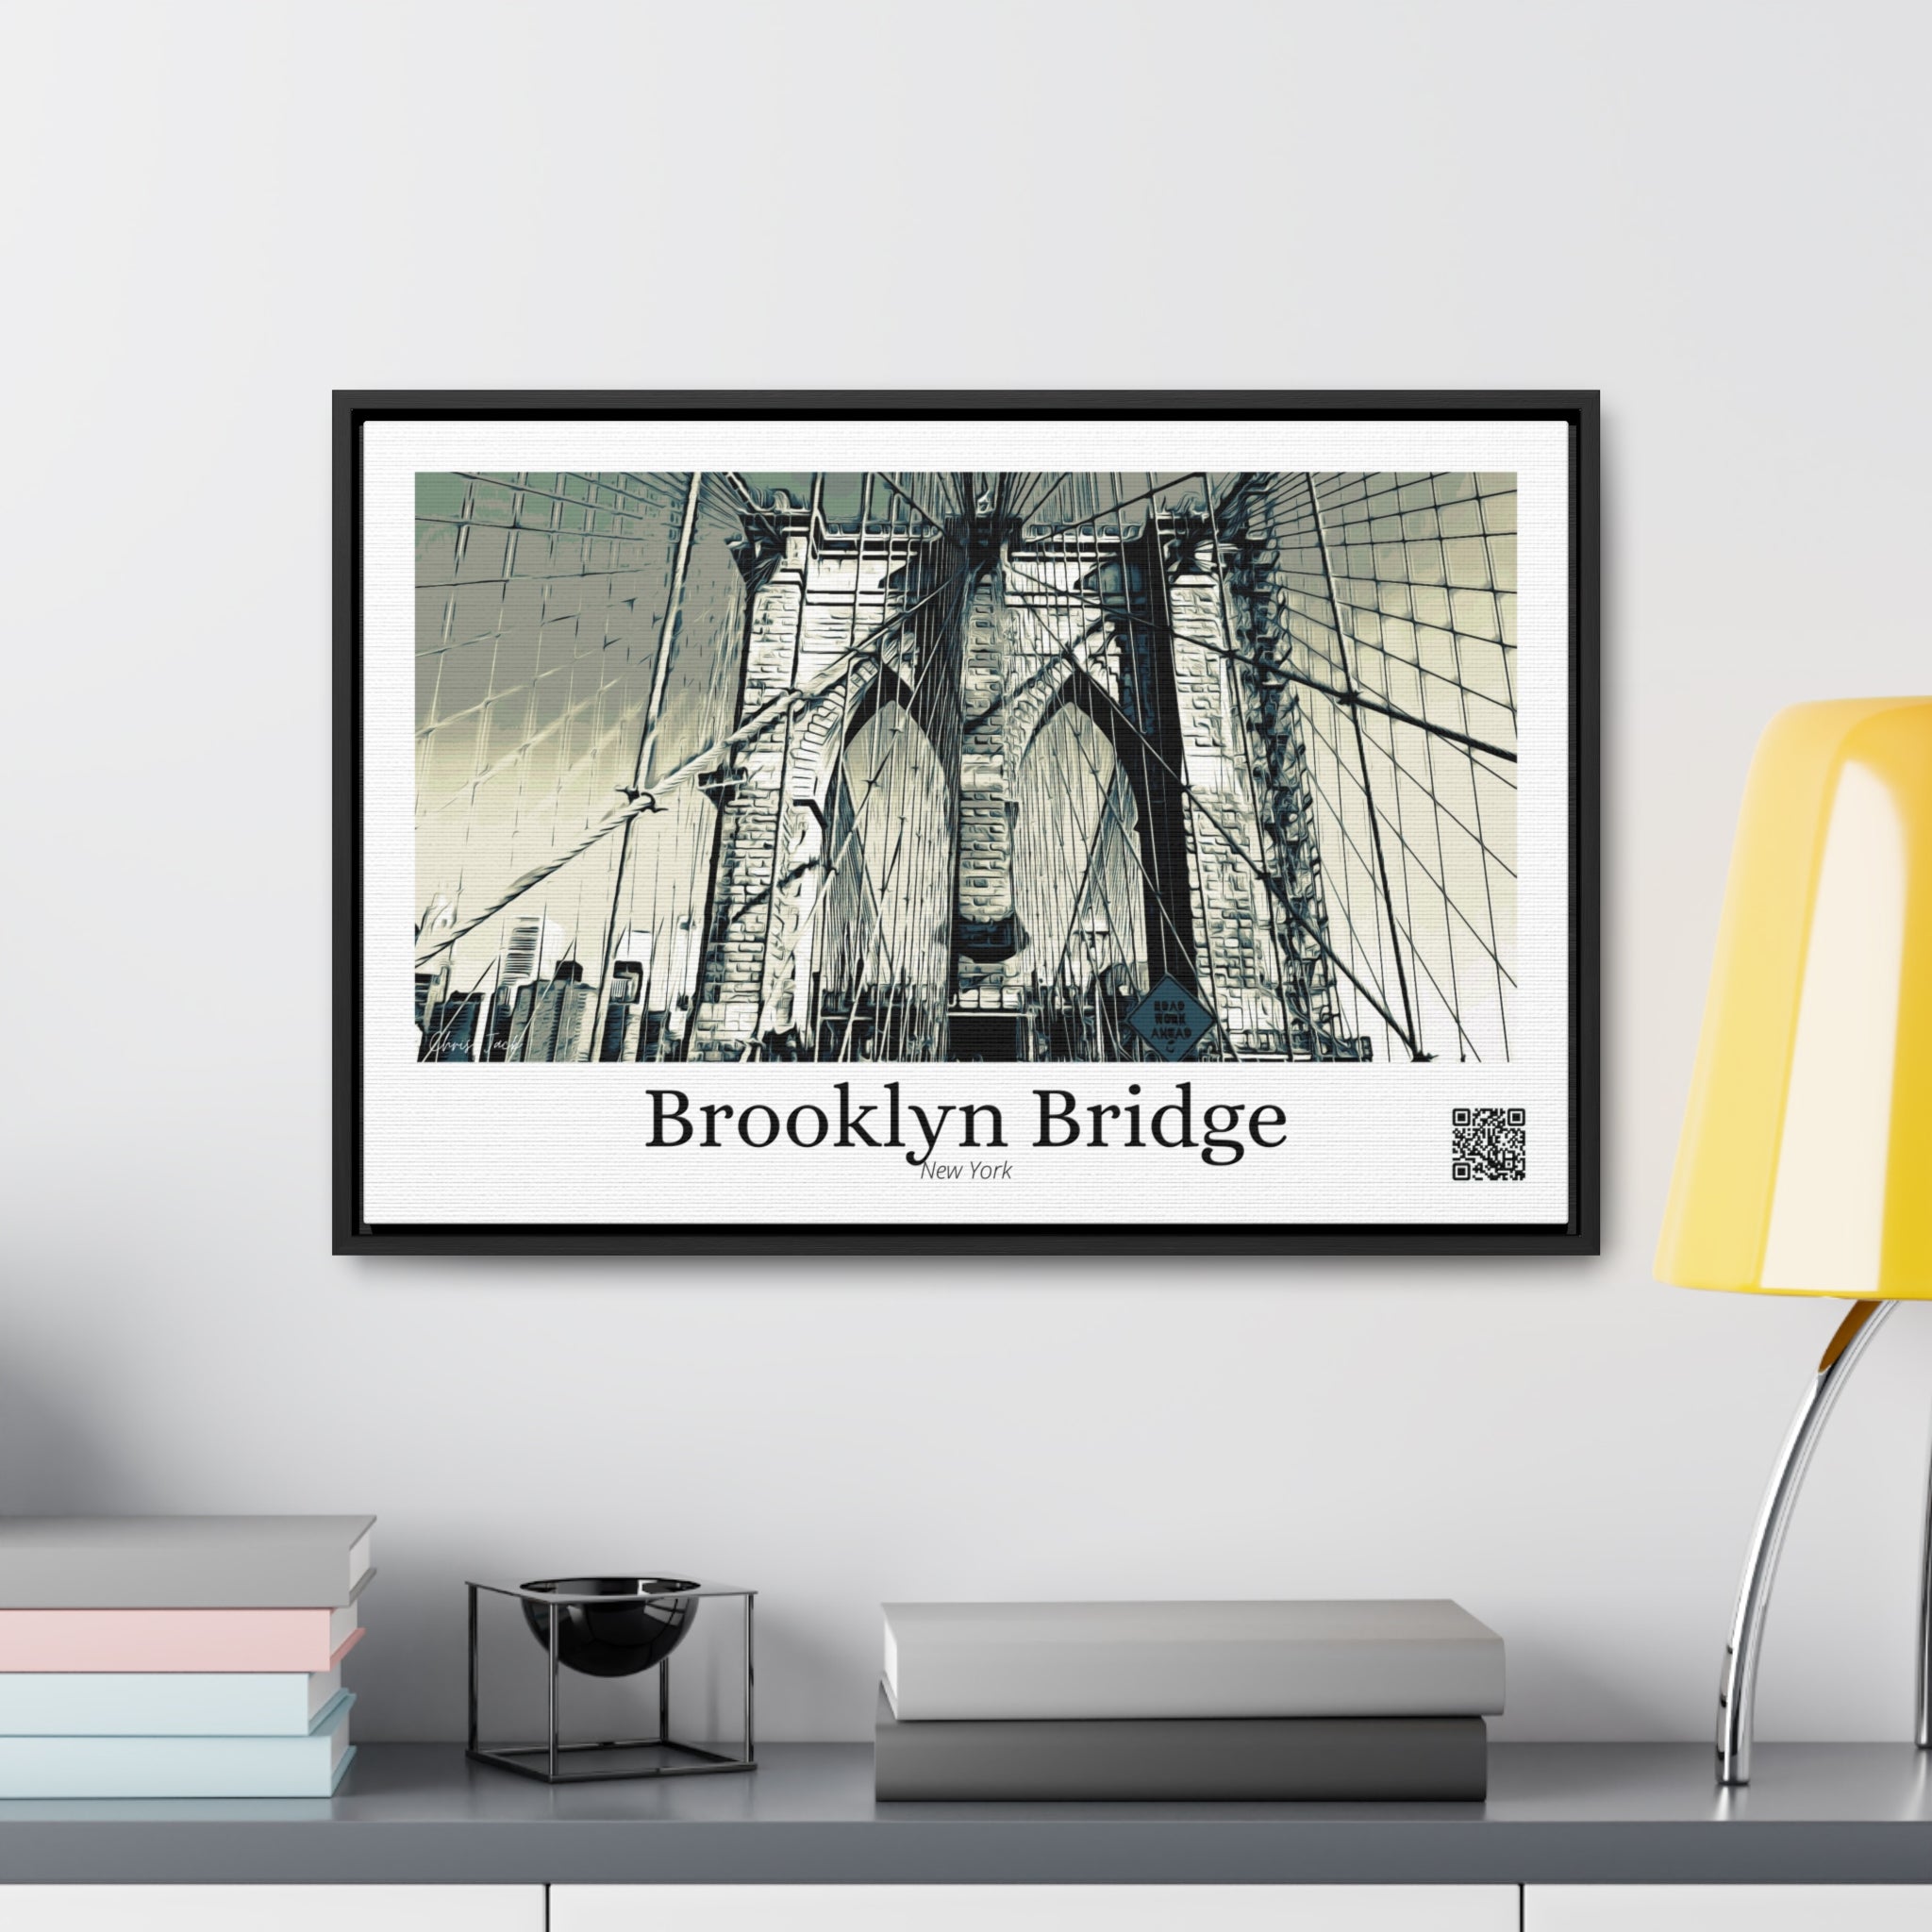 Brooklyn's Backbone: A Pillar's Tale